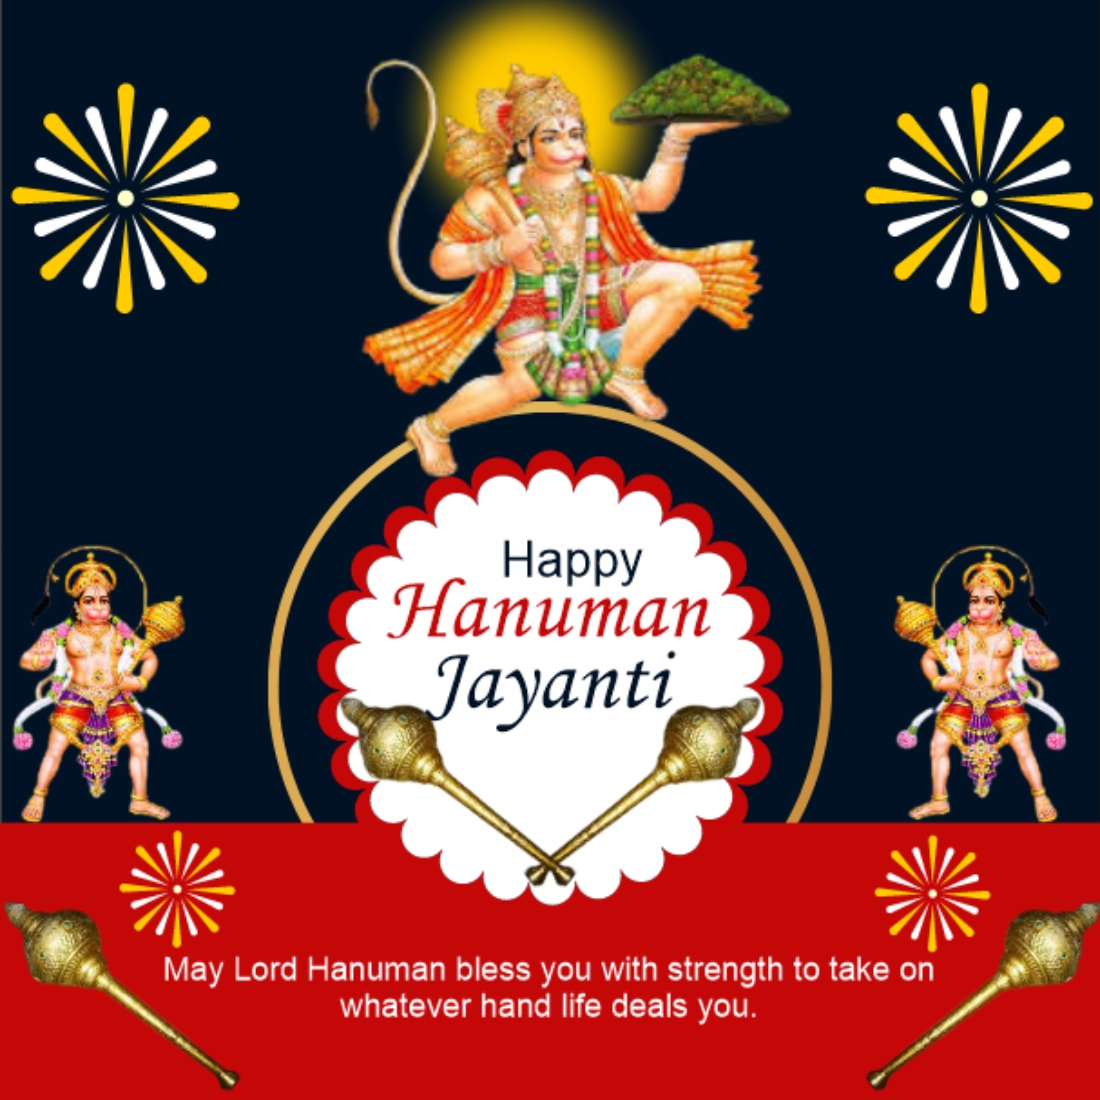 Hanuman Jayanti template preview image.